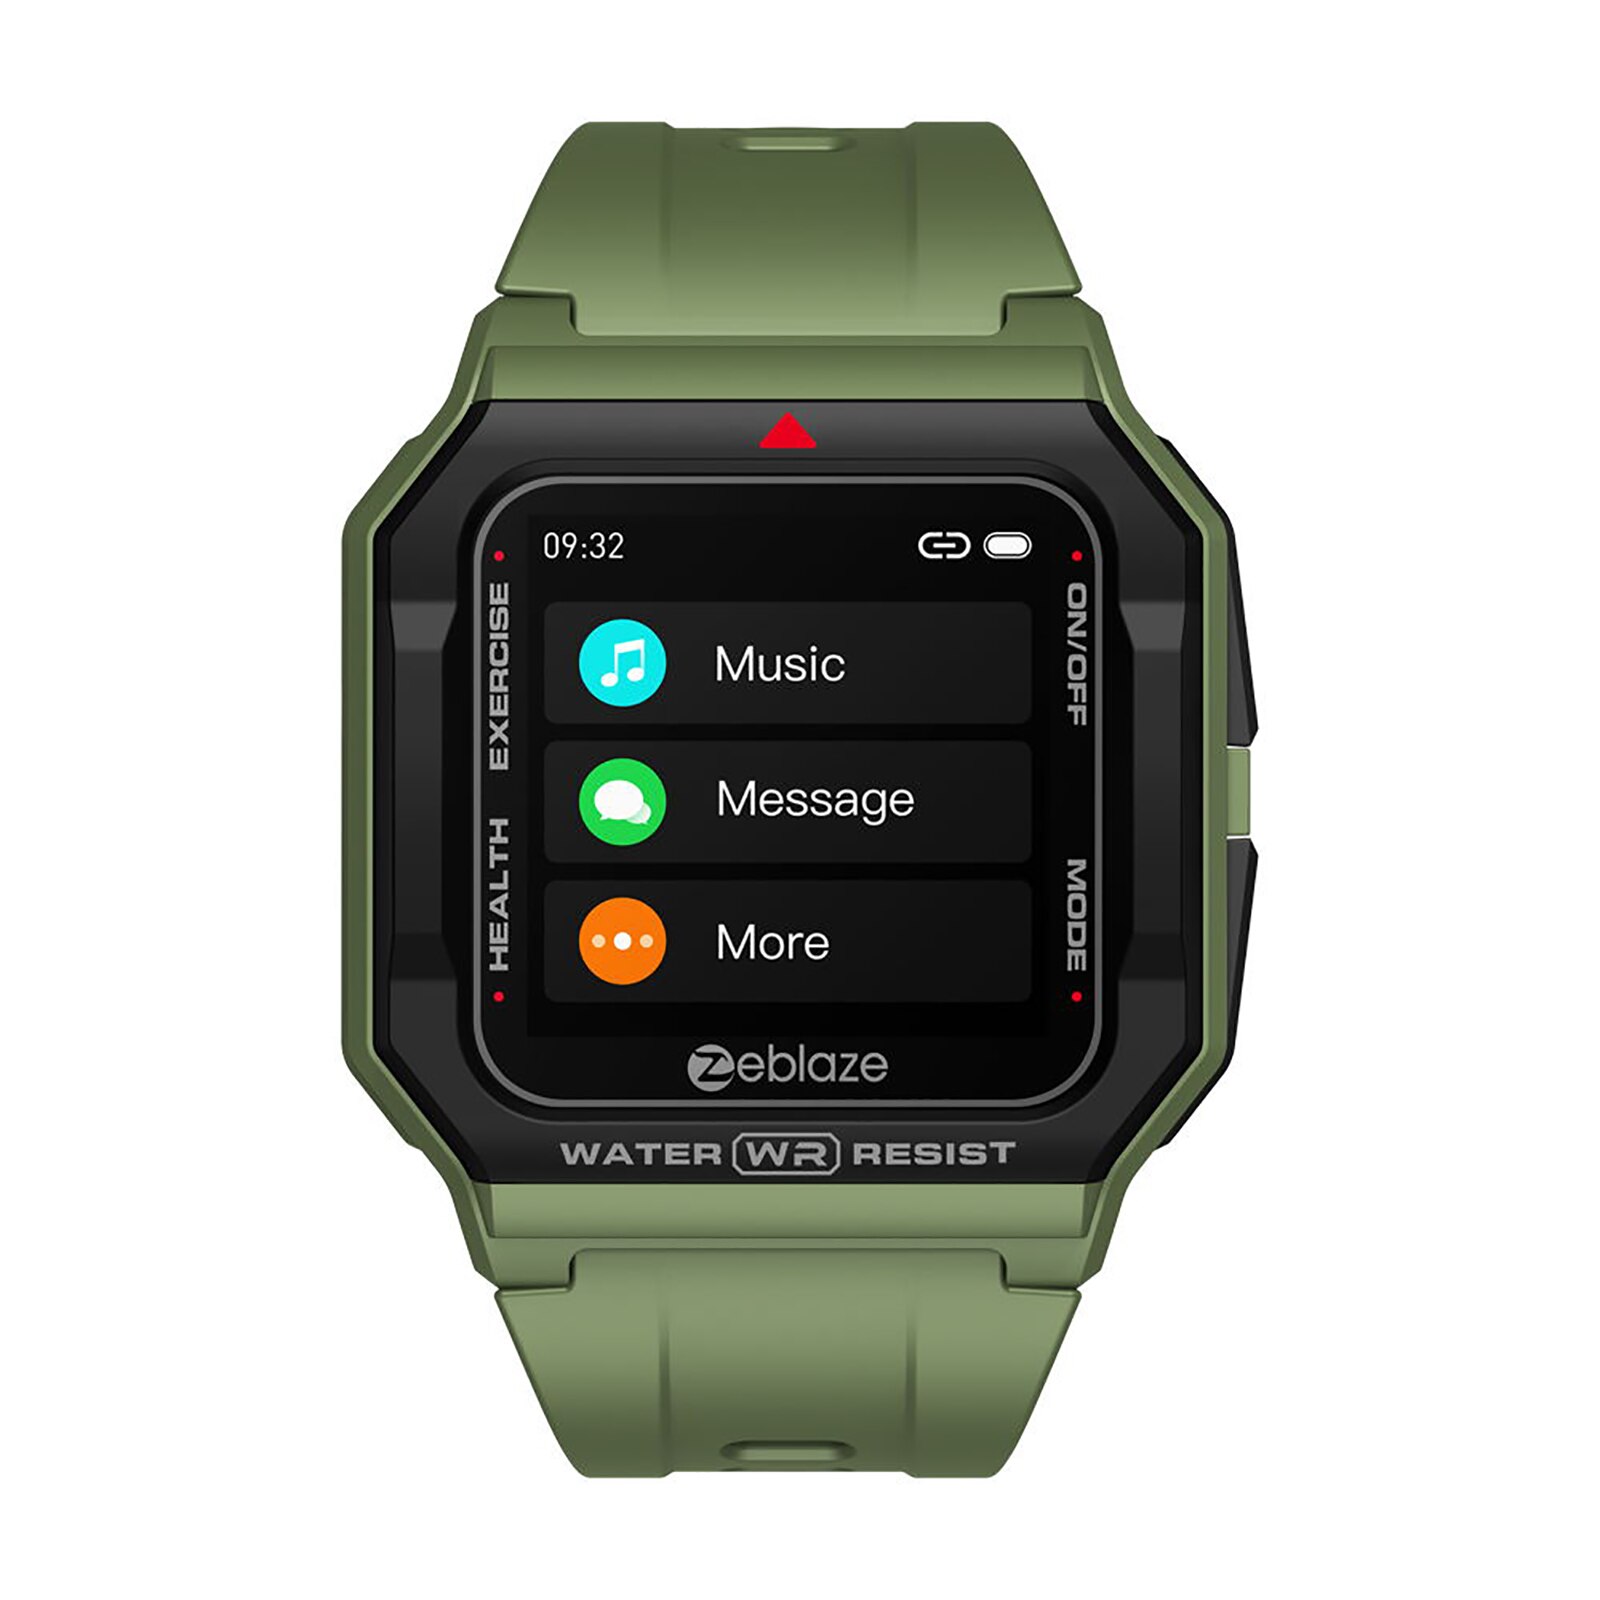 Zeblaze Ares Retro Smart Watch Man Women's Smartwatches Wristwatch Heart Rate Blood Pressure 13 Sports Modes Smart Watch: Green